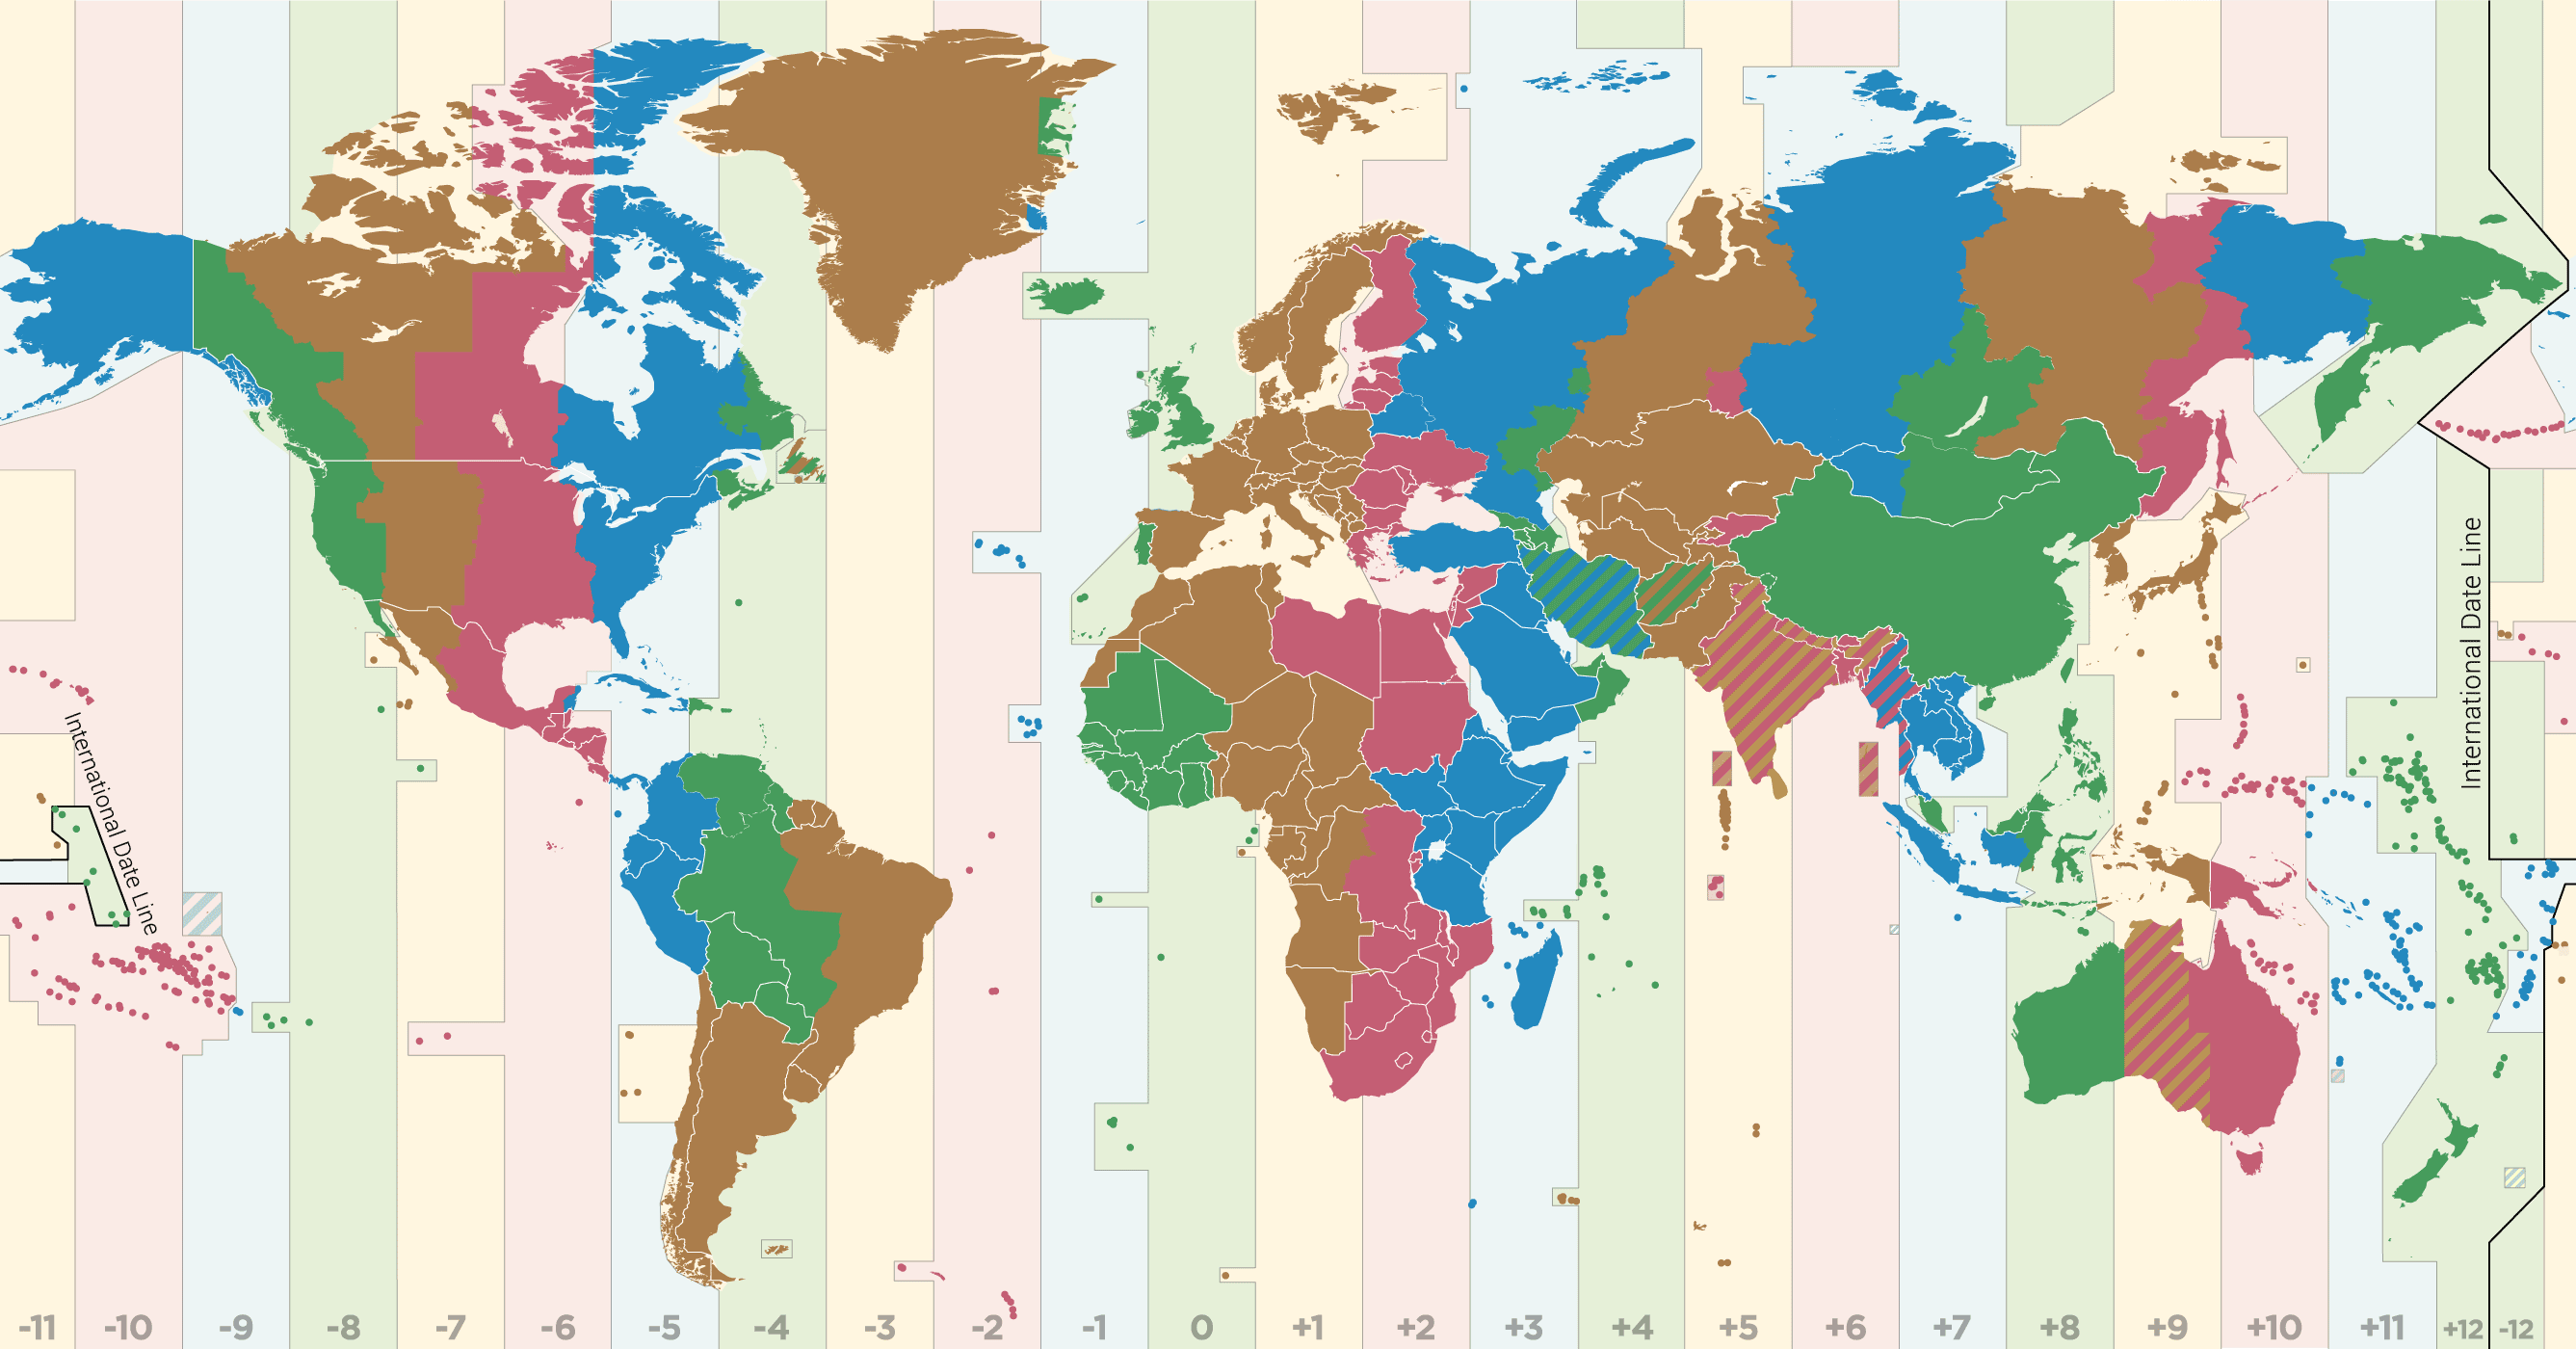 Mapa del mundo con la zona horaria UTC+0 resaltada